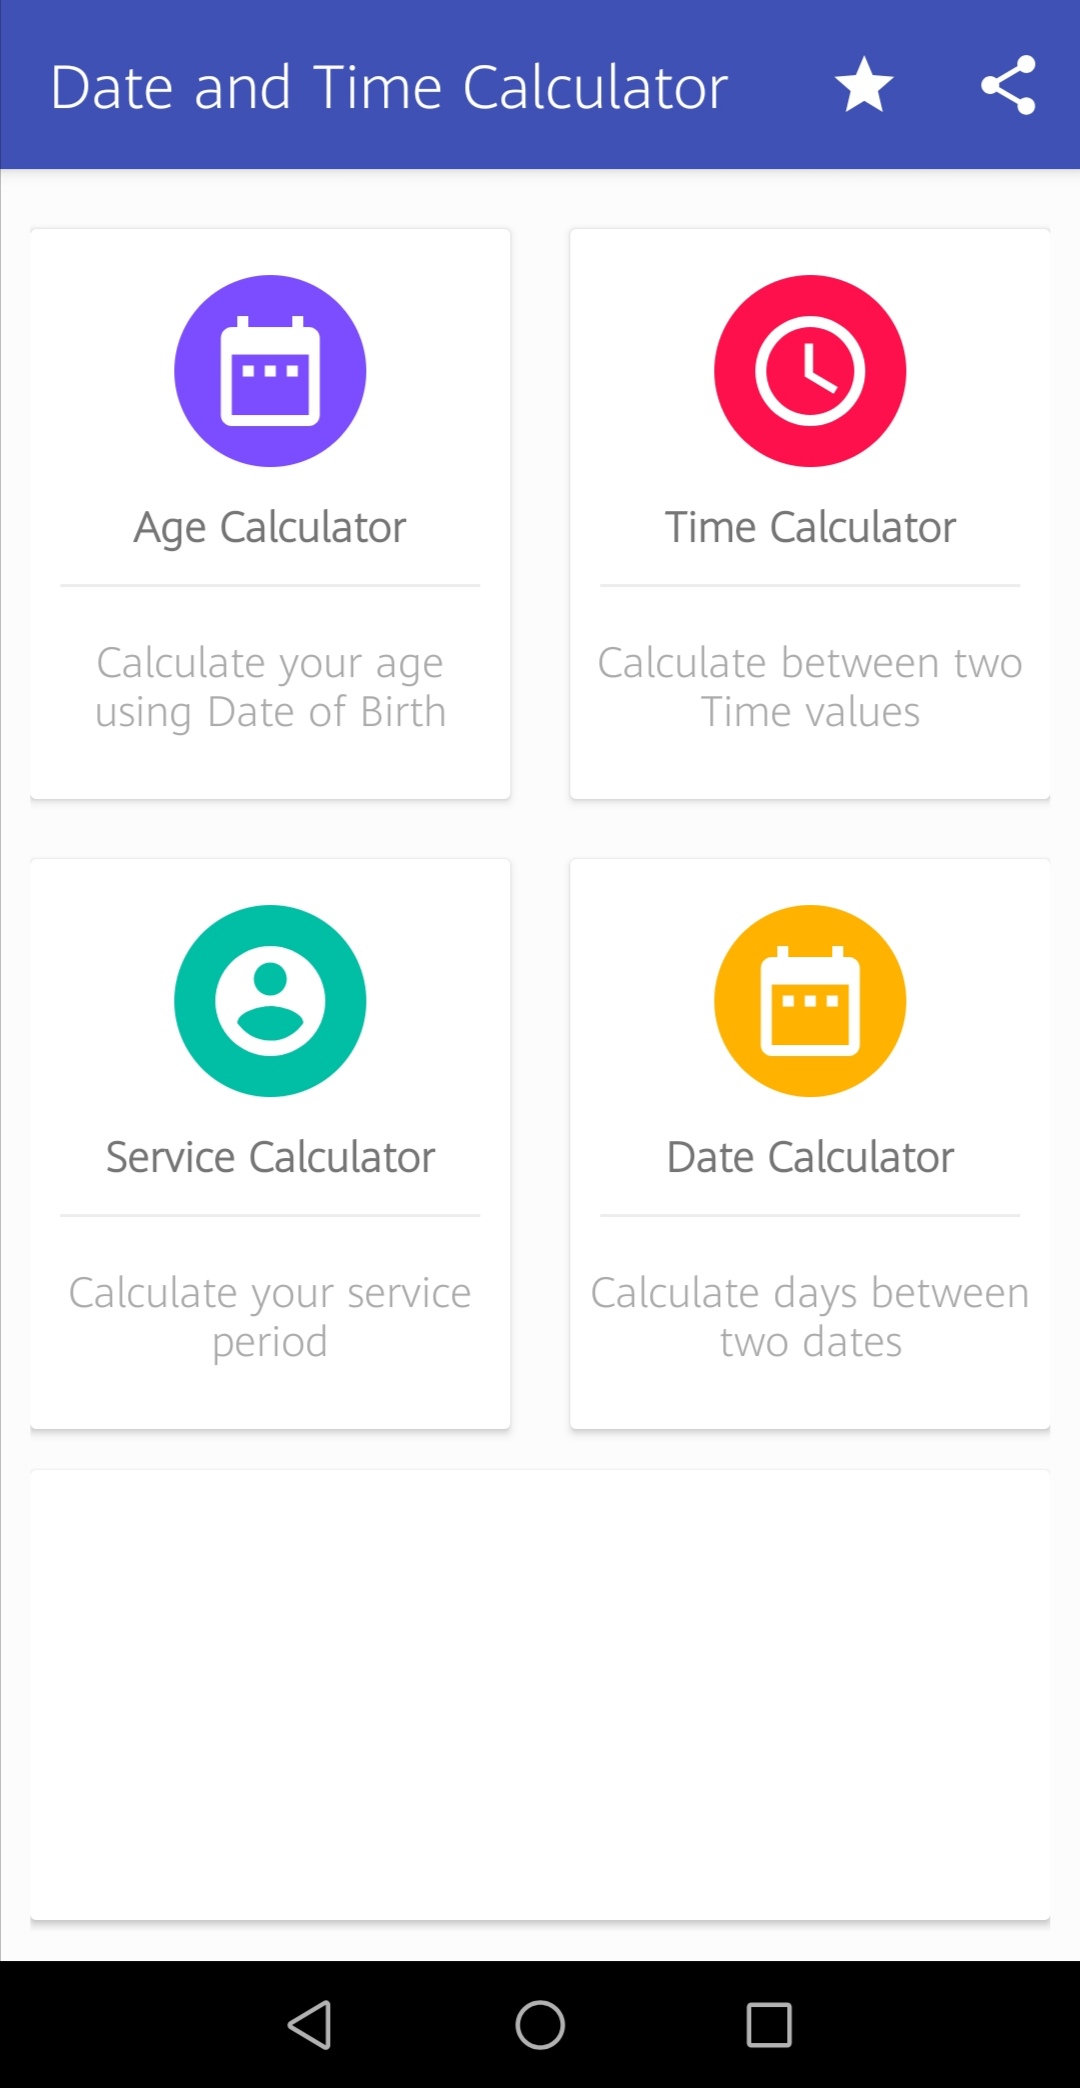 Date And Time Calculator By Sangitakri332 Codecanyon